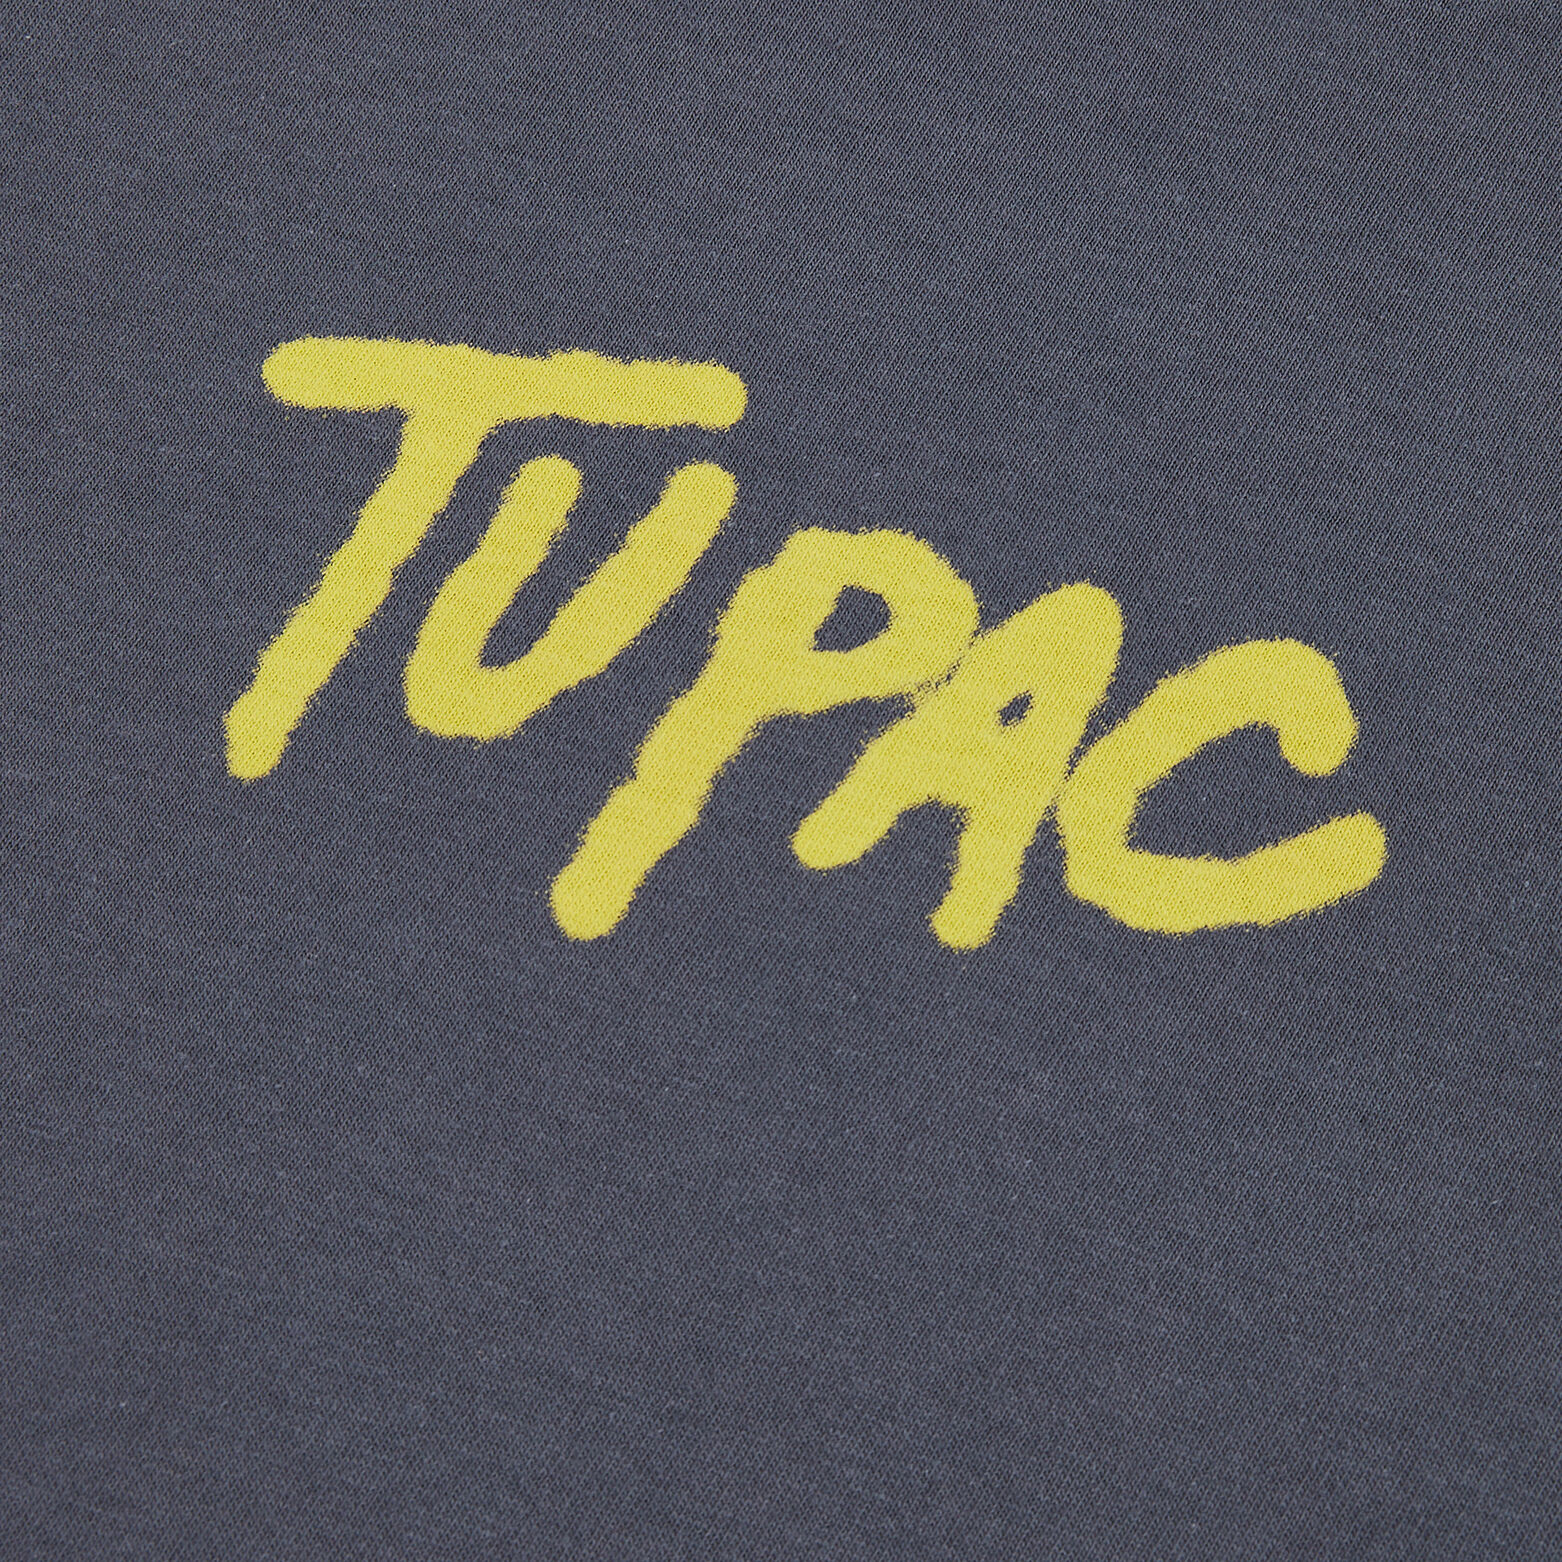 T-shirt, Tupac-licentie